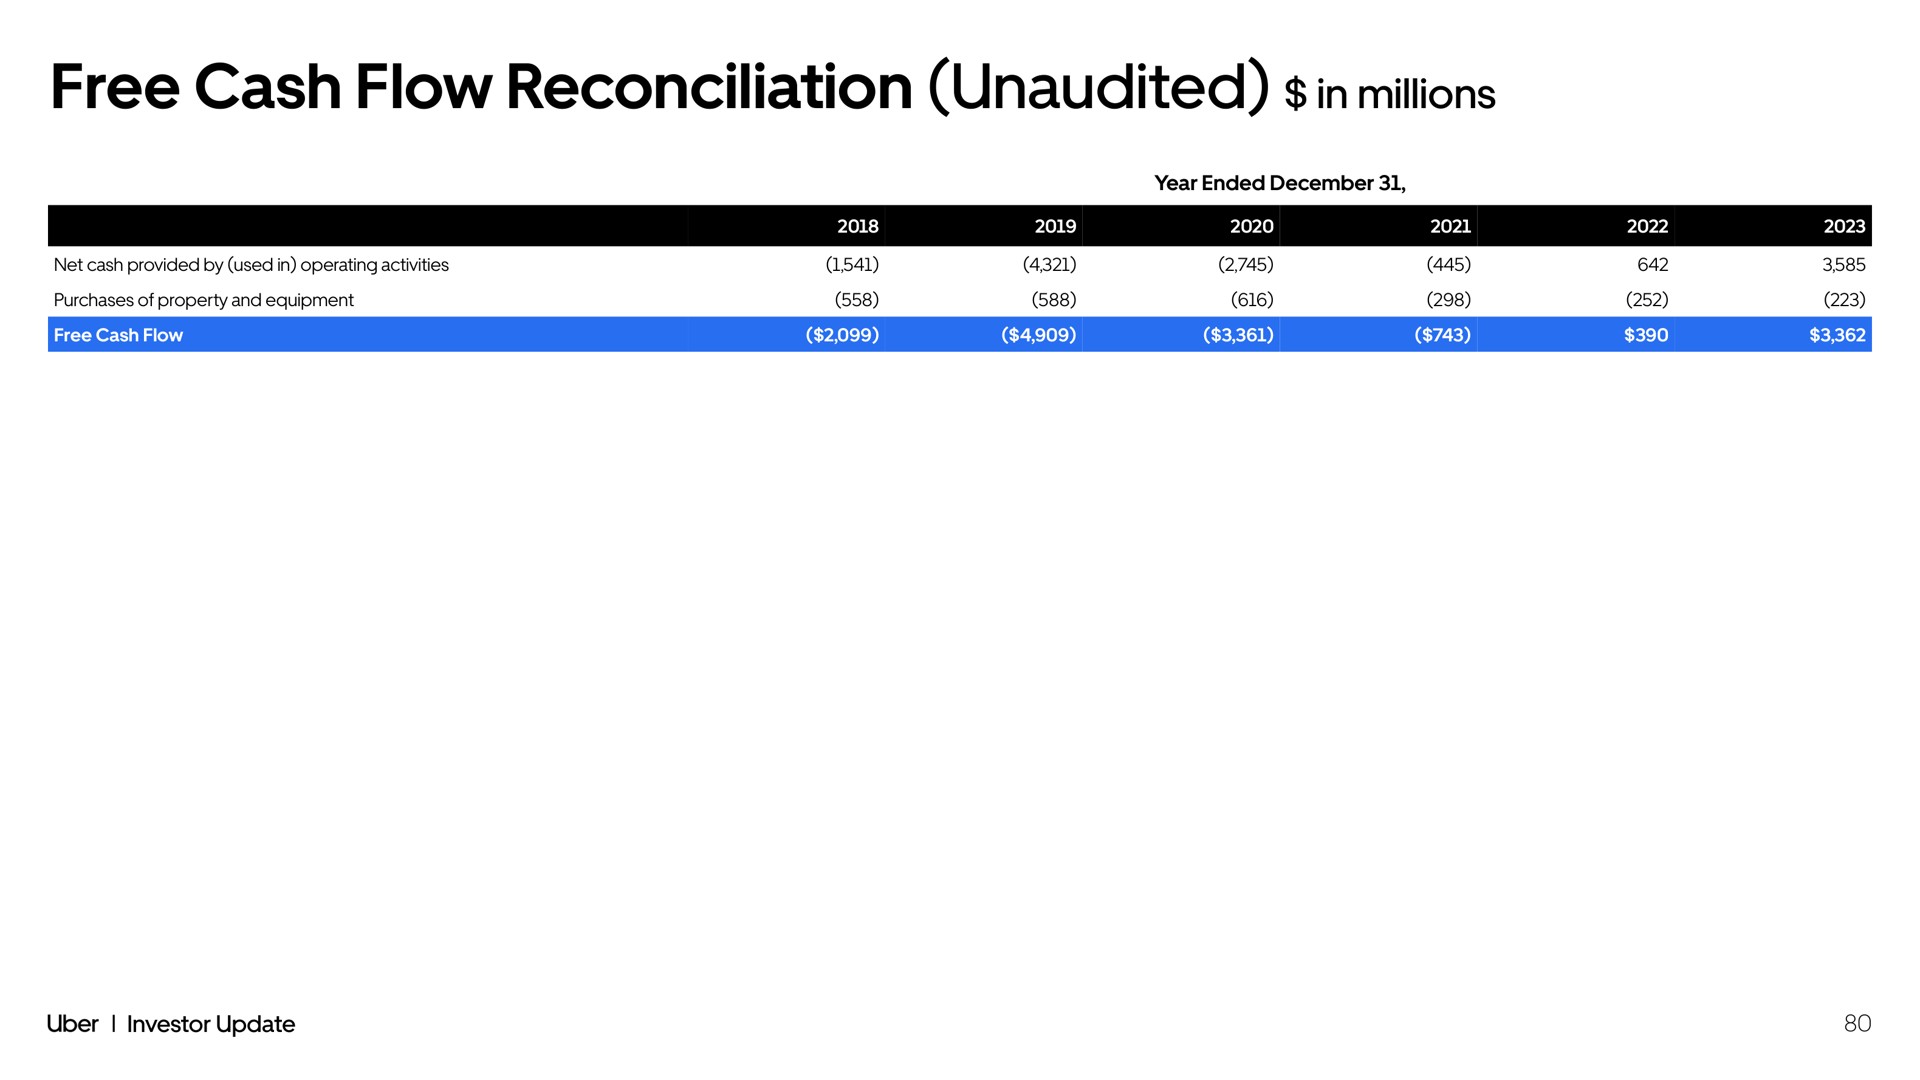 free cash flow reconciliation unaudited in millions | Uber